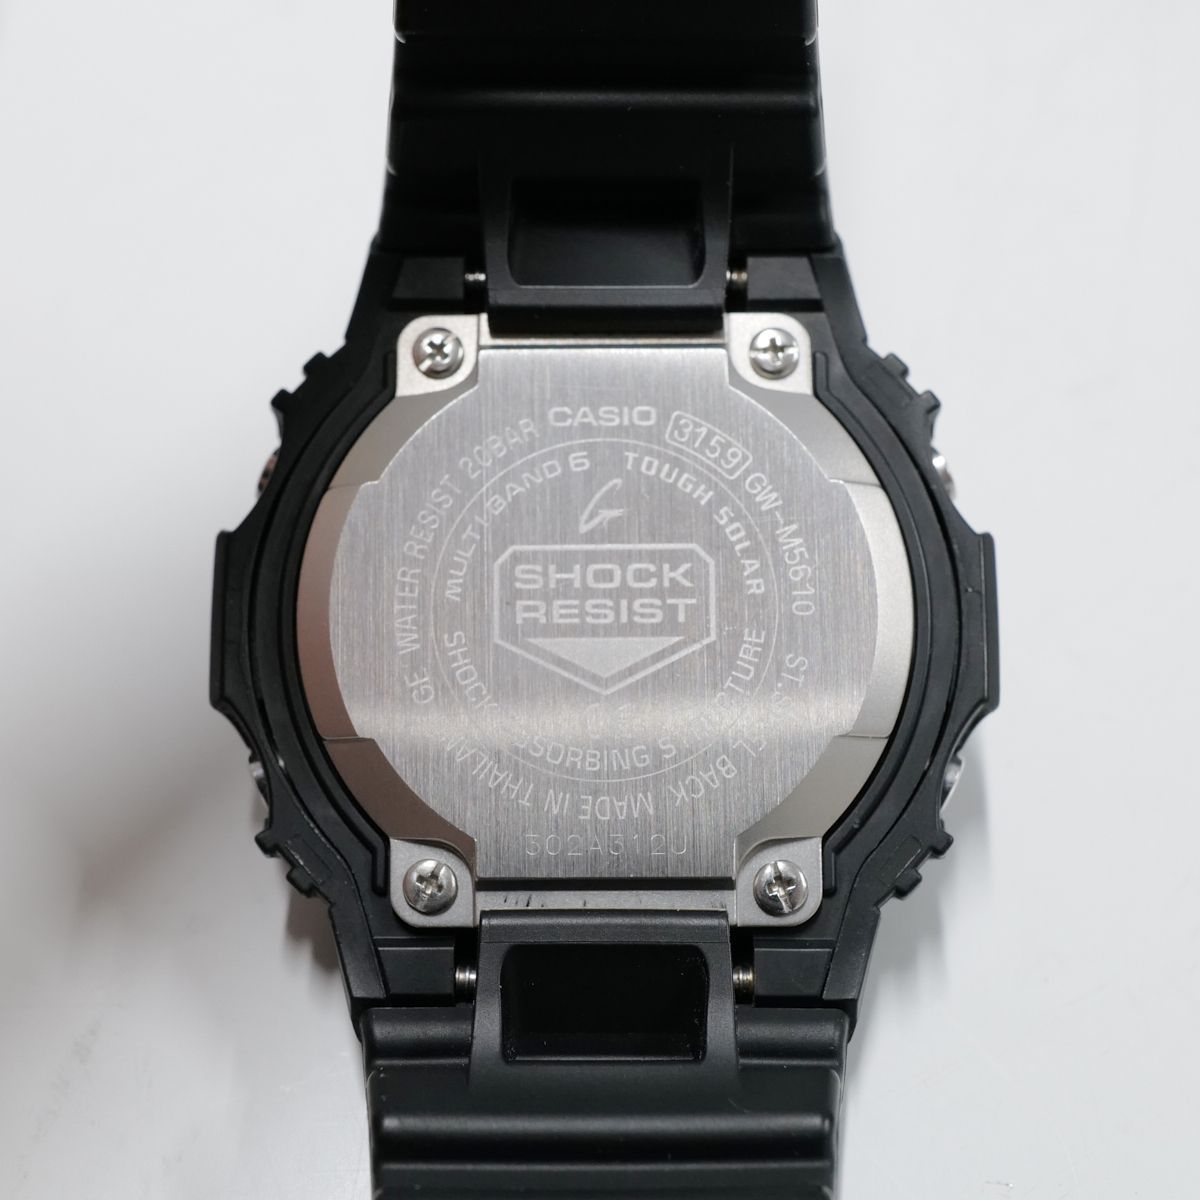 GW-M5610 CASIO G-SHOCK メンズ 腕時計 USED美品 カシオ タフソーラー 